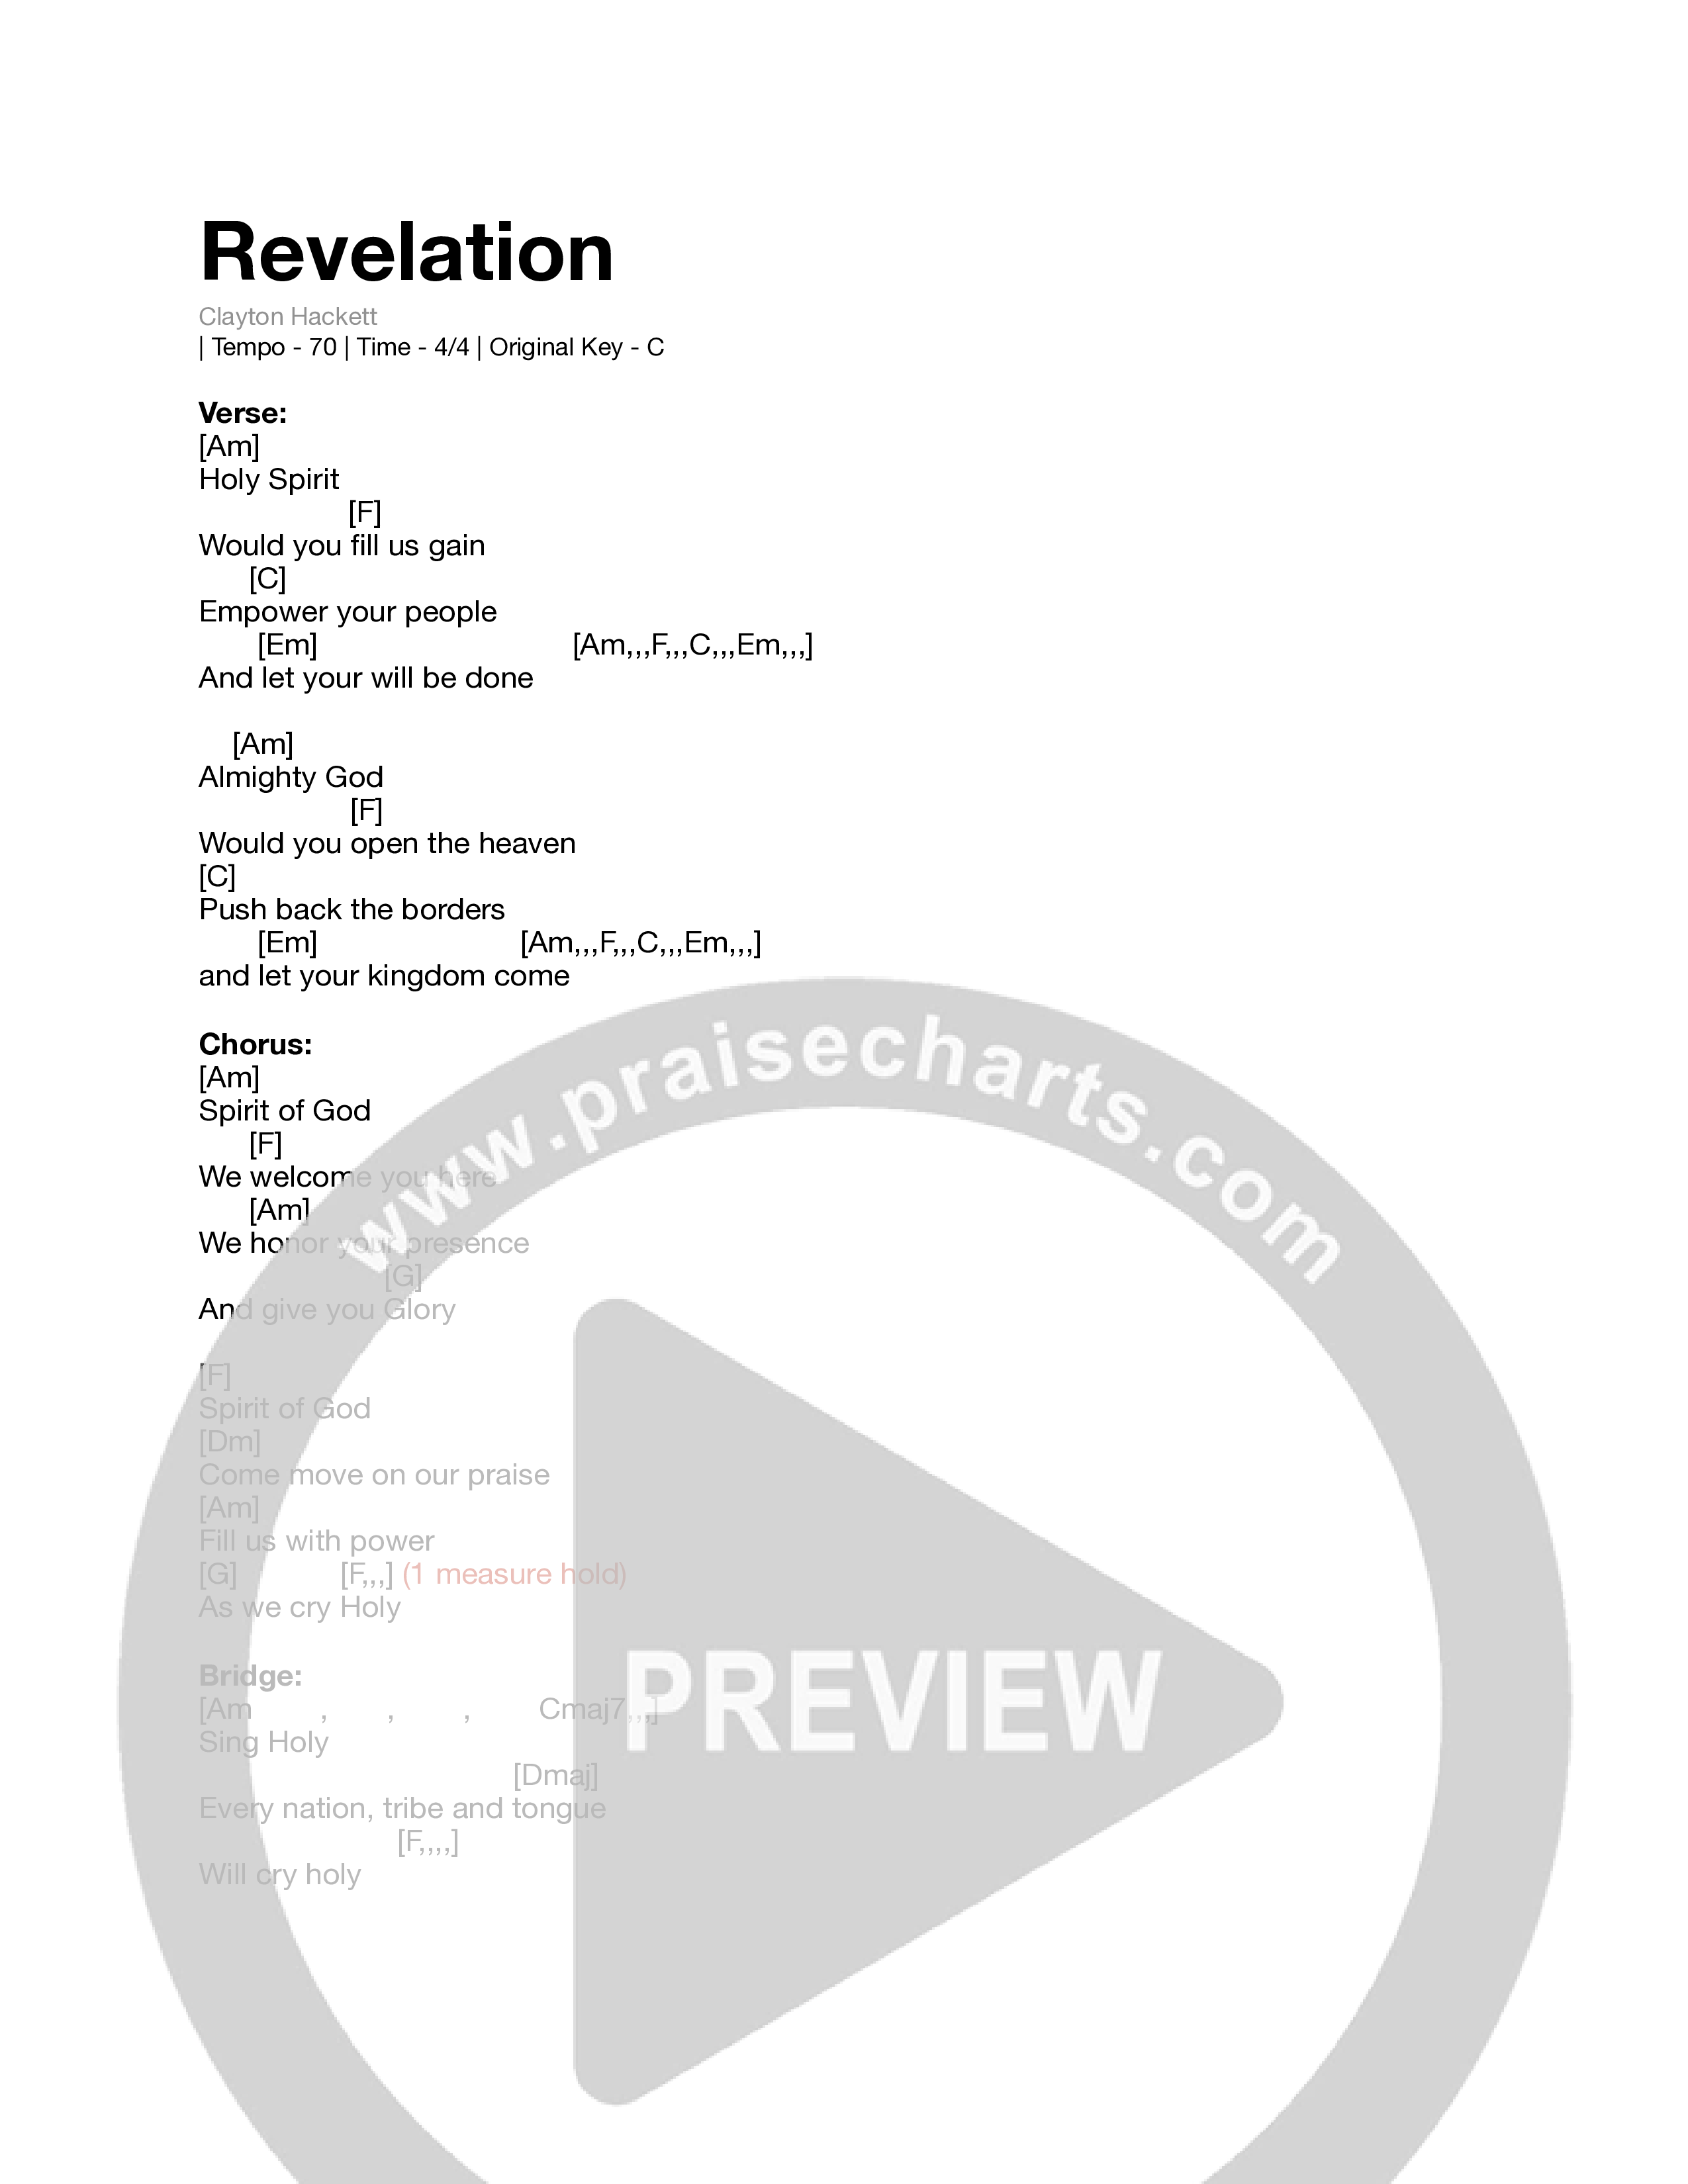 Revelation Chord Chart (Clayton Hackett)